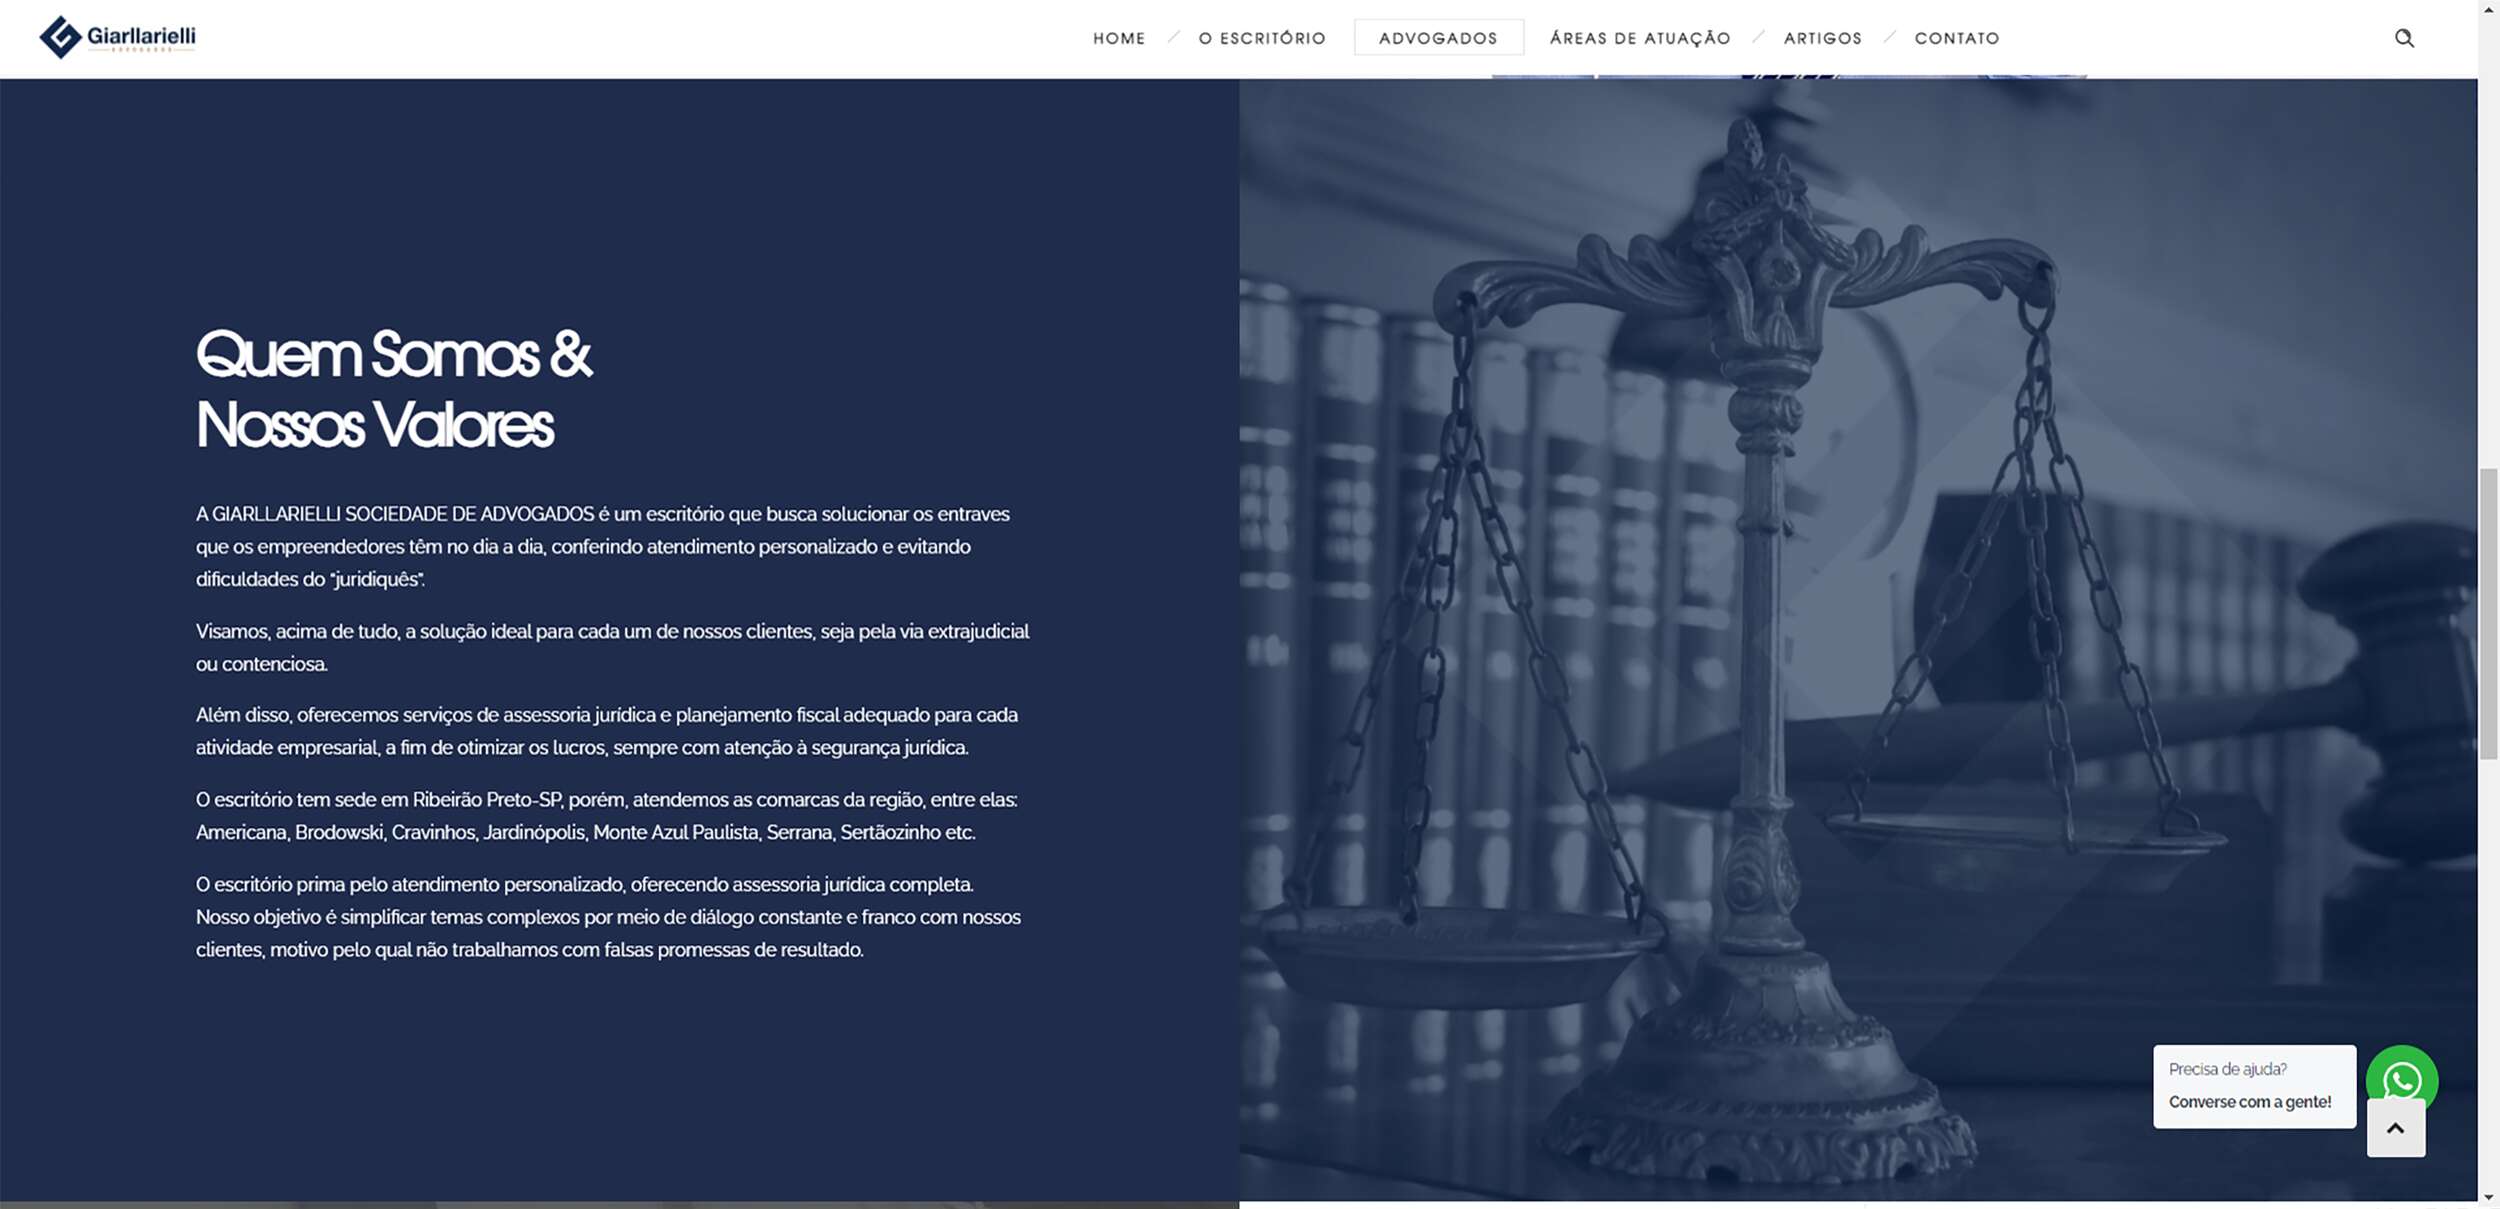 RAO Marketing Digital - Giarllarielli Advogados Website